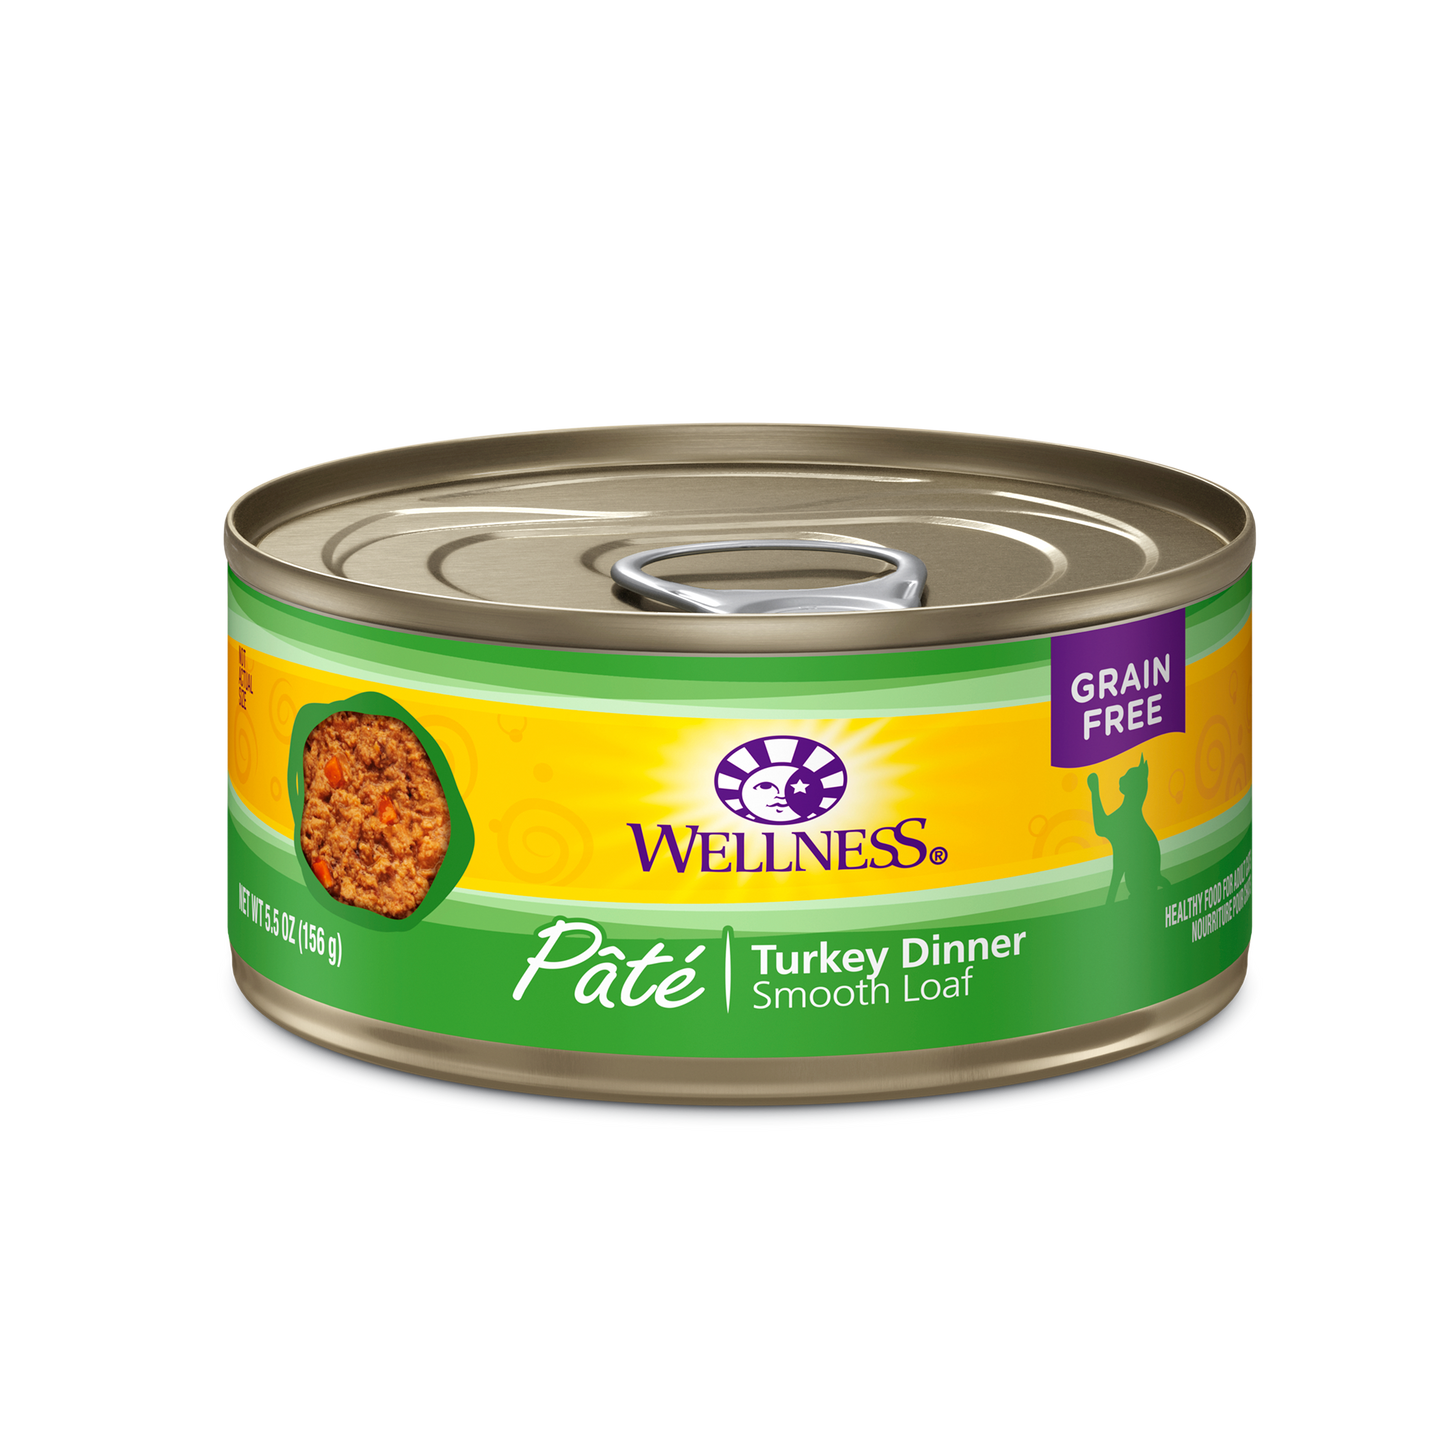 Wellness Premium Canned Cat Food | Complete Health Grain-Free Formula | Turkey Pate Recipe